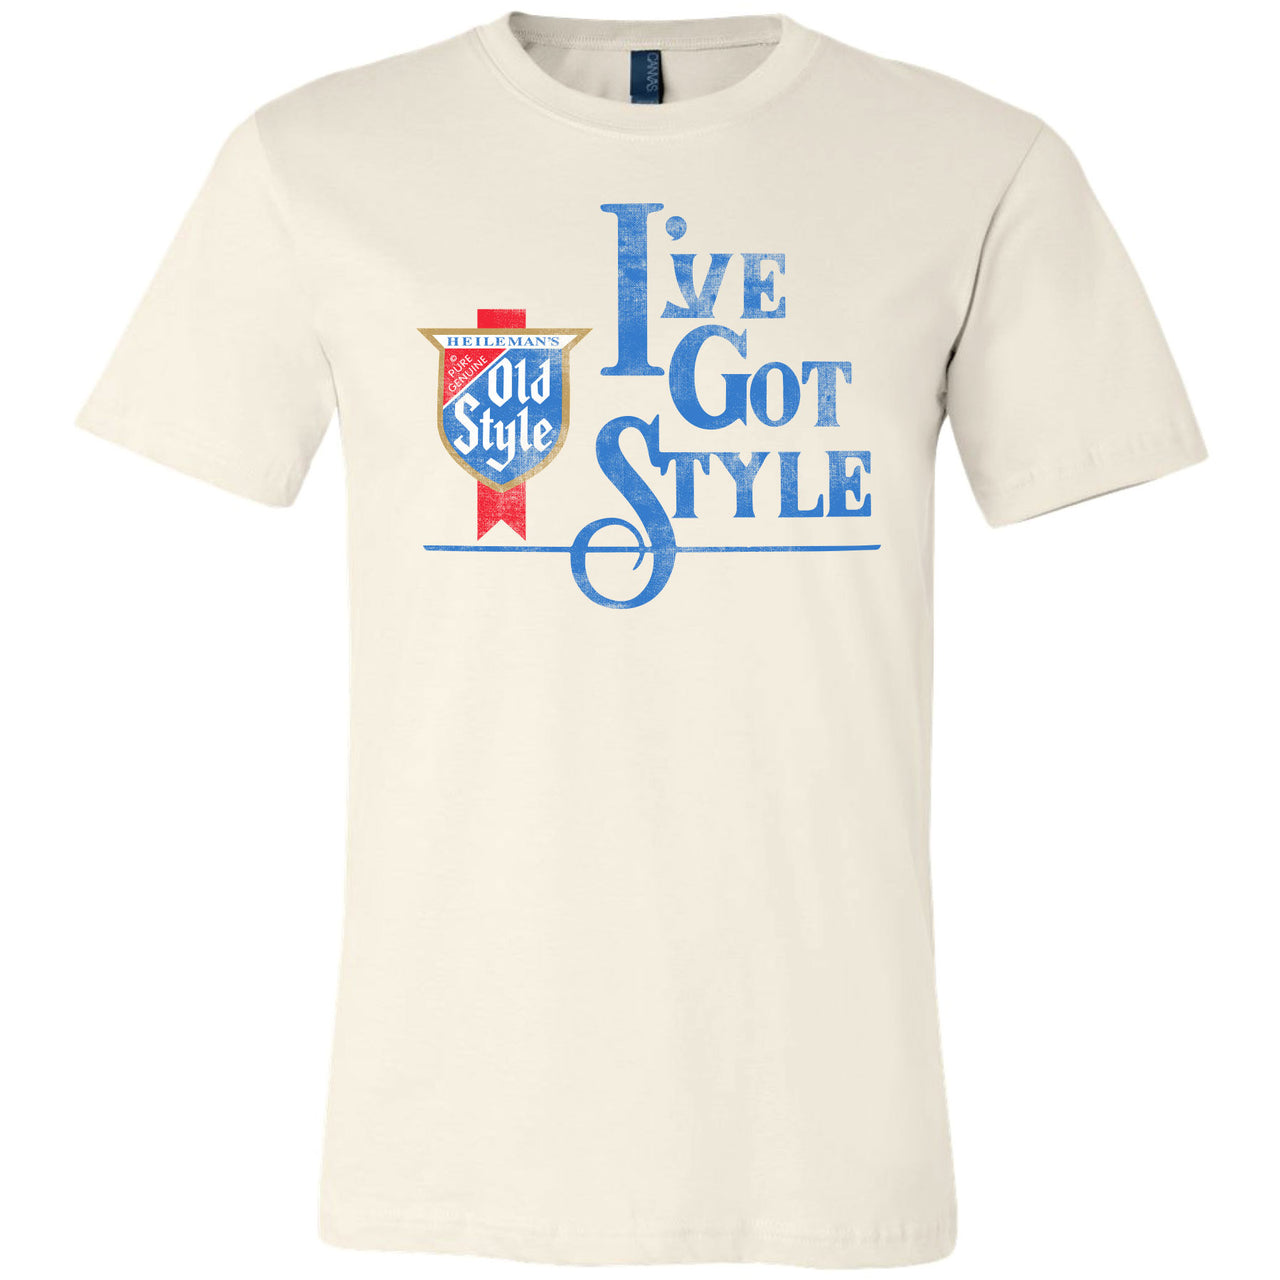 Old Style - I've Got Style T-shirt